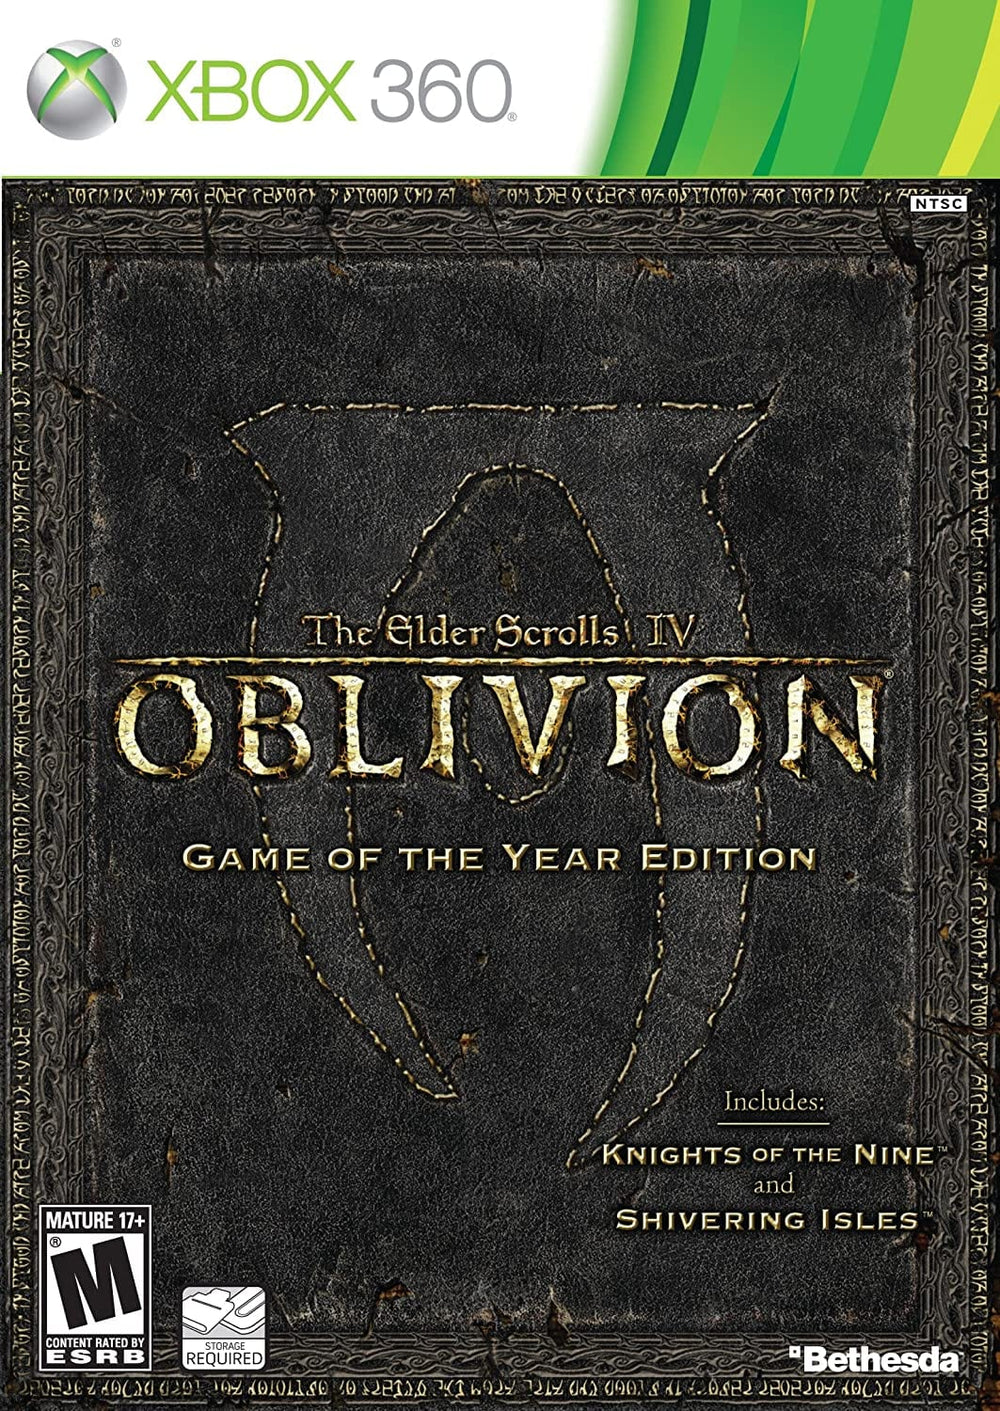 Oblivion Xbox 360